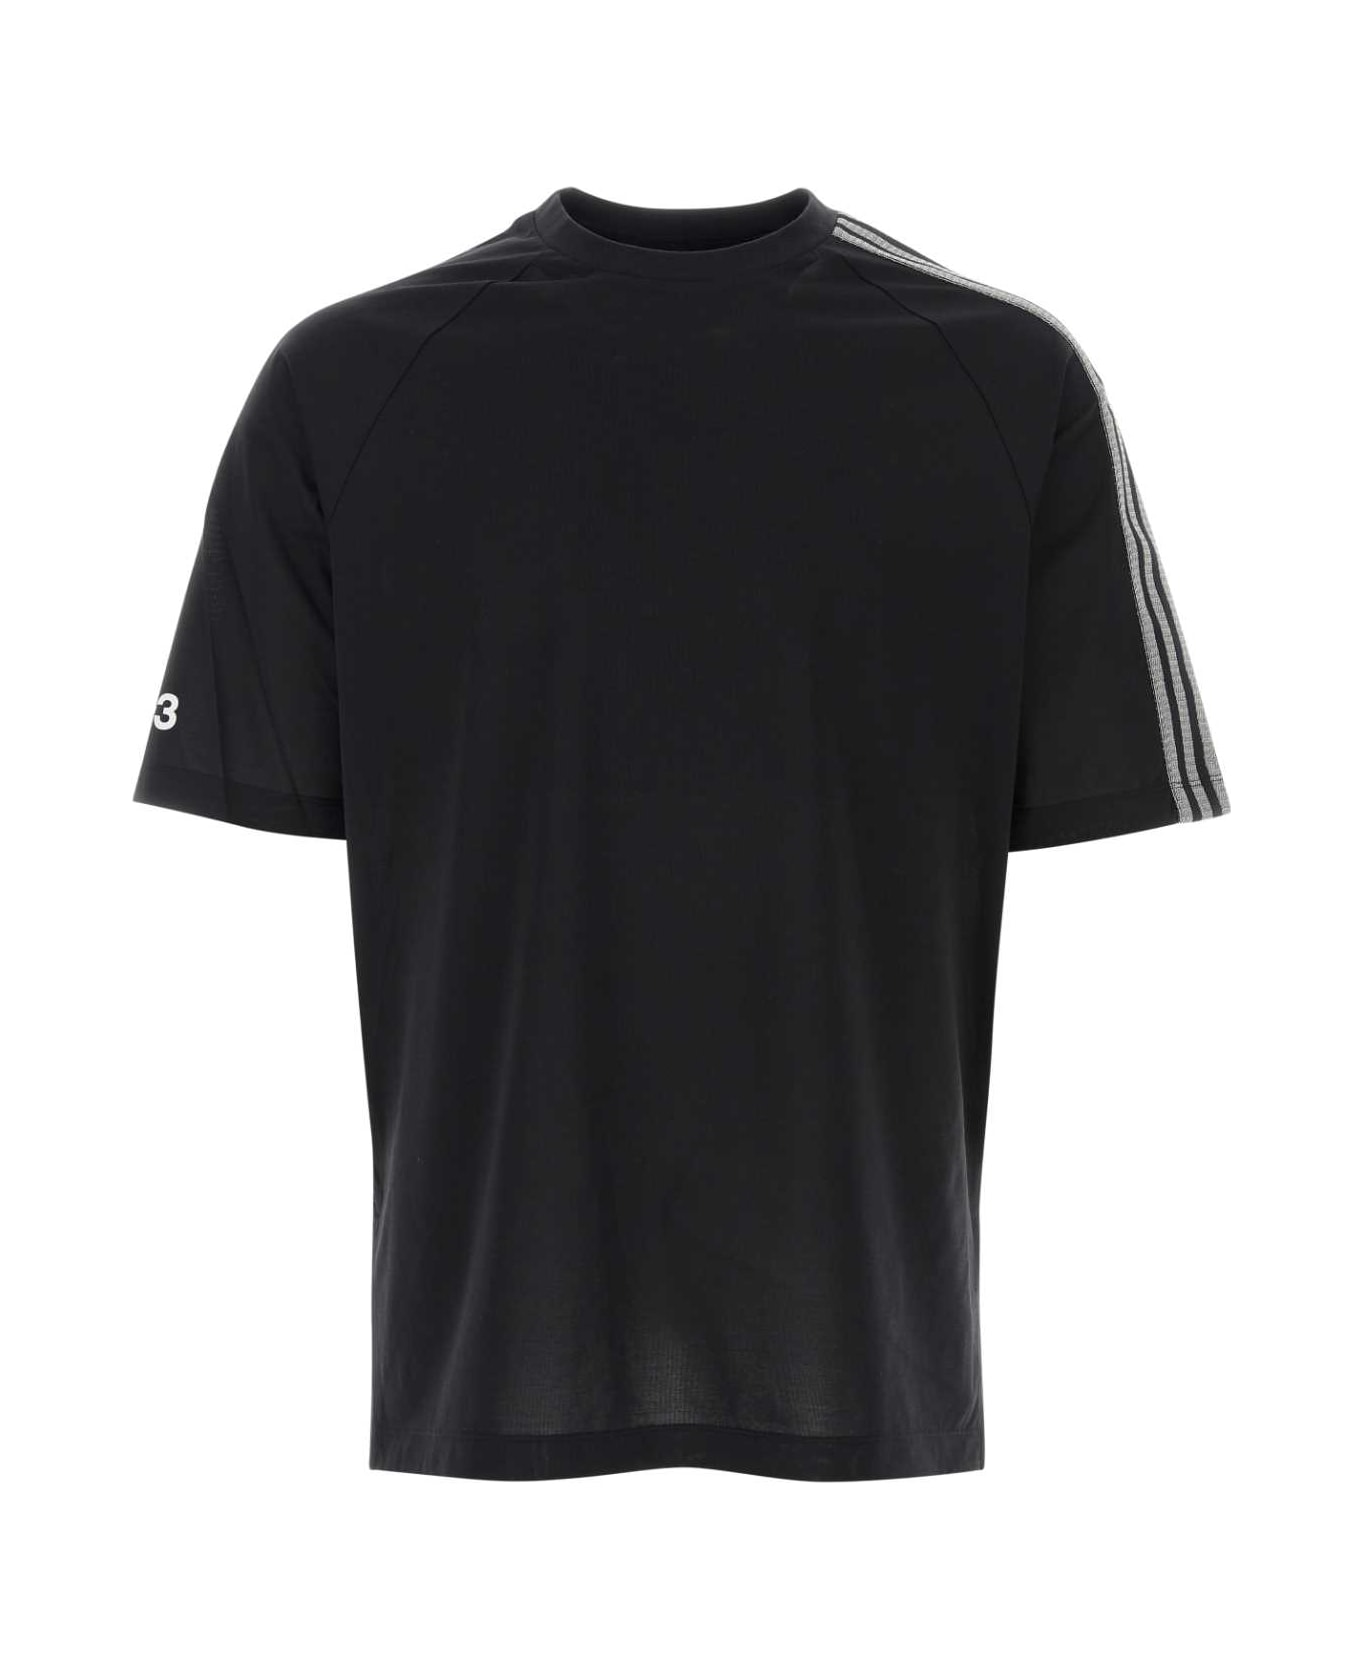 Y-3 Black Cotton Blend Oversize T-shirt - BLACKOFFWHITE シャツ